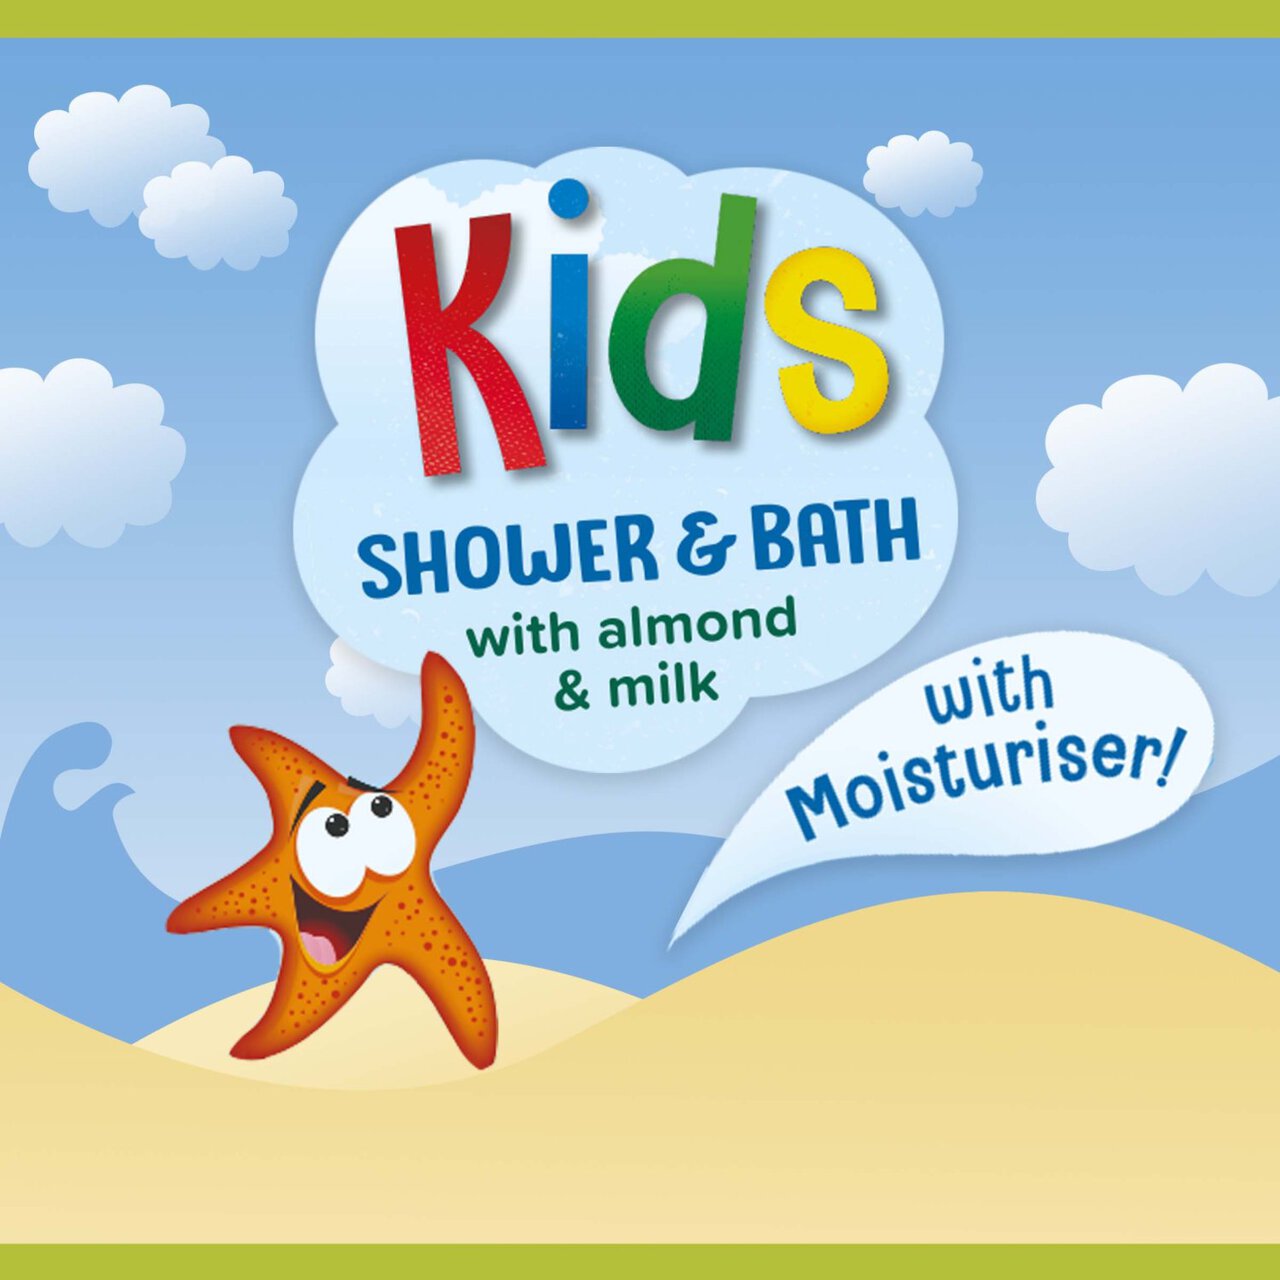 Palmolive Naturals Kids Shower and Bubble Bath Pump 750ml 750ml